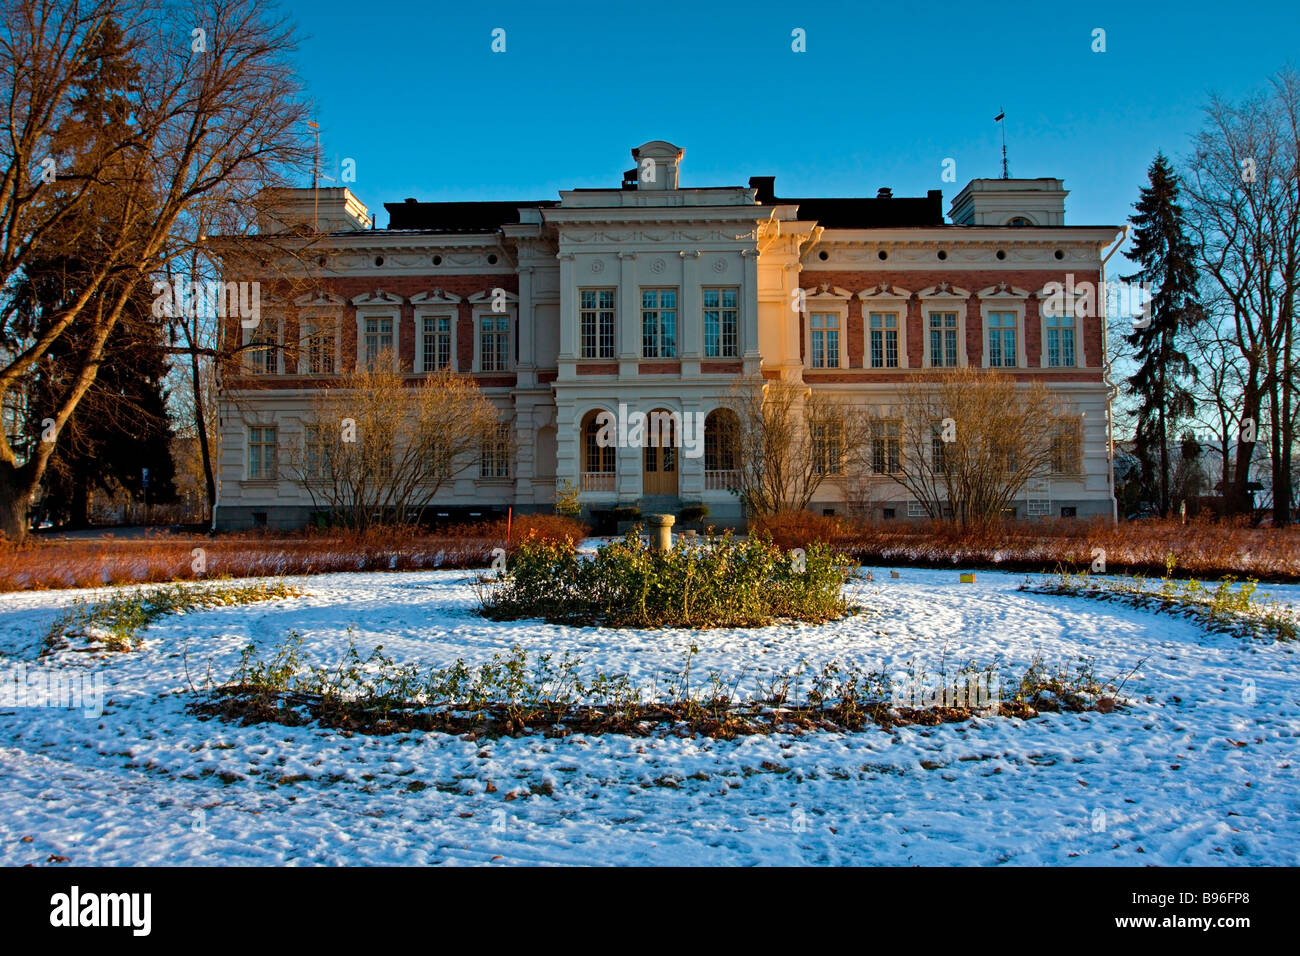 Tampere: Hatanpää Mansion & Arboretum: Pyhäjärvi Stockfotografie - Alamy